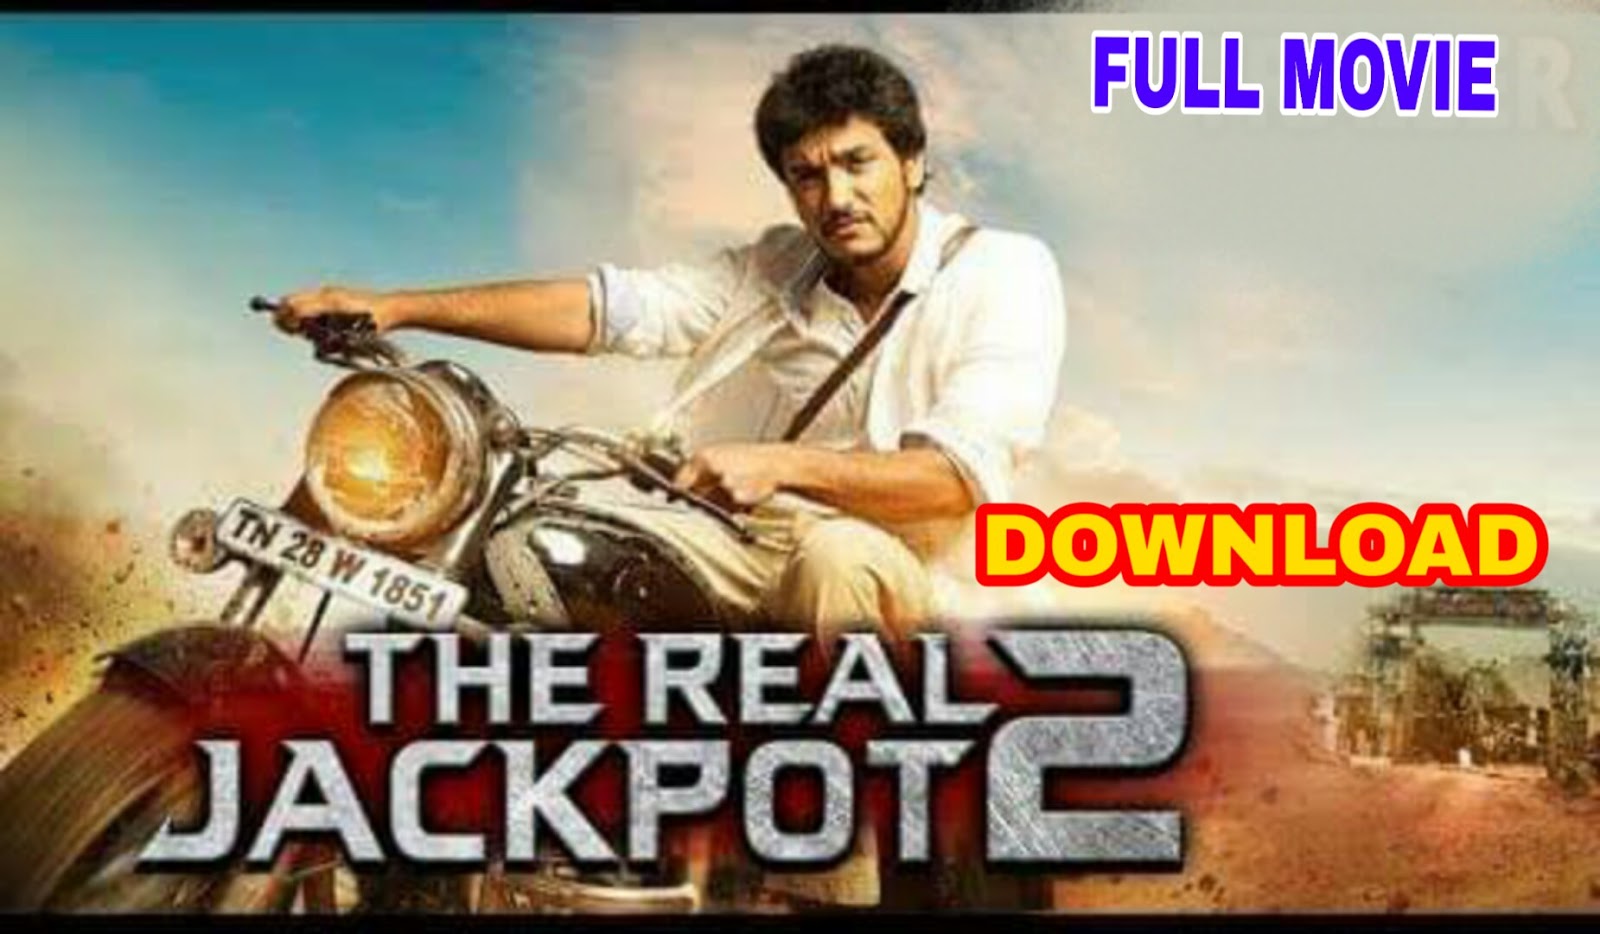 The Real Jackpot 2 (Indrajith) Hindi Dubbed Full Movie Download 720p HD